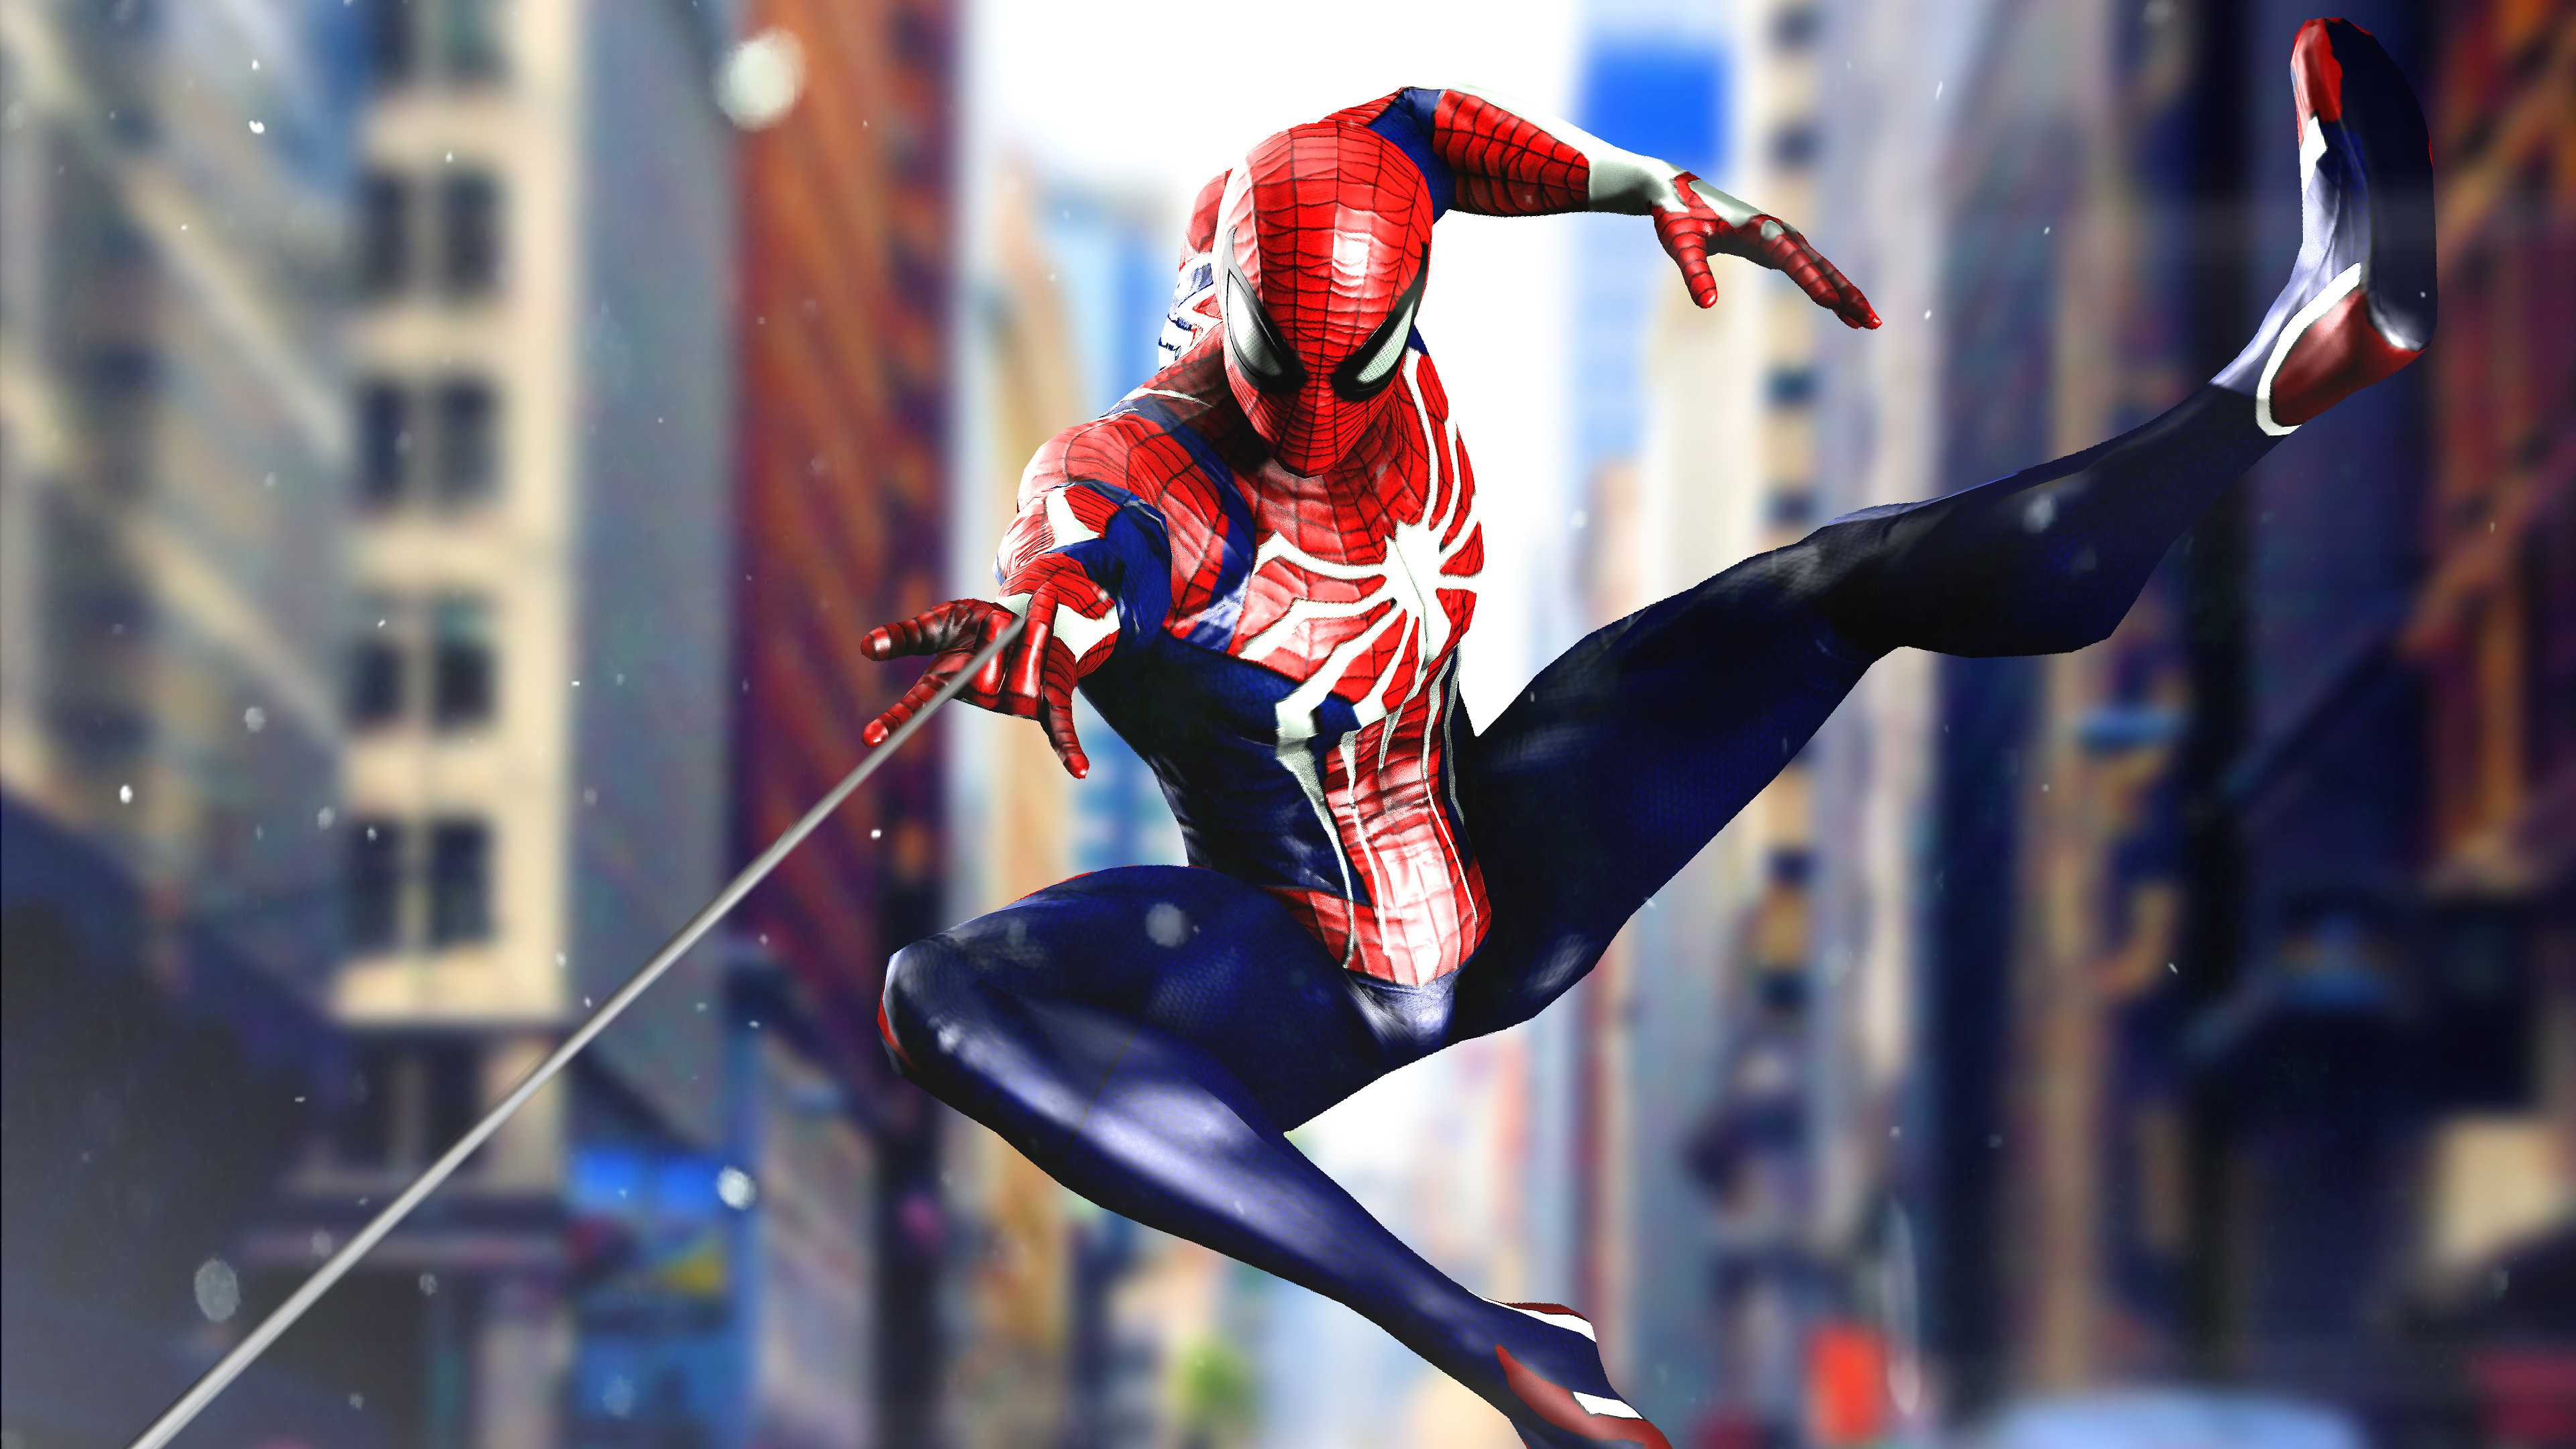 Spider Man PS4 Wallpapers  Top 20 Best Spider Man PS4 Wallpapers Download